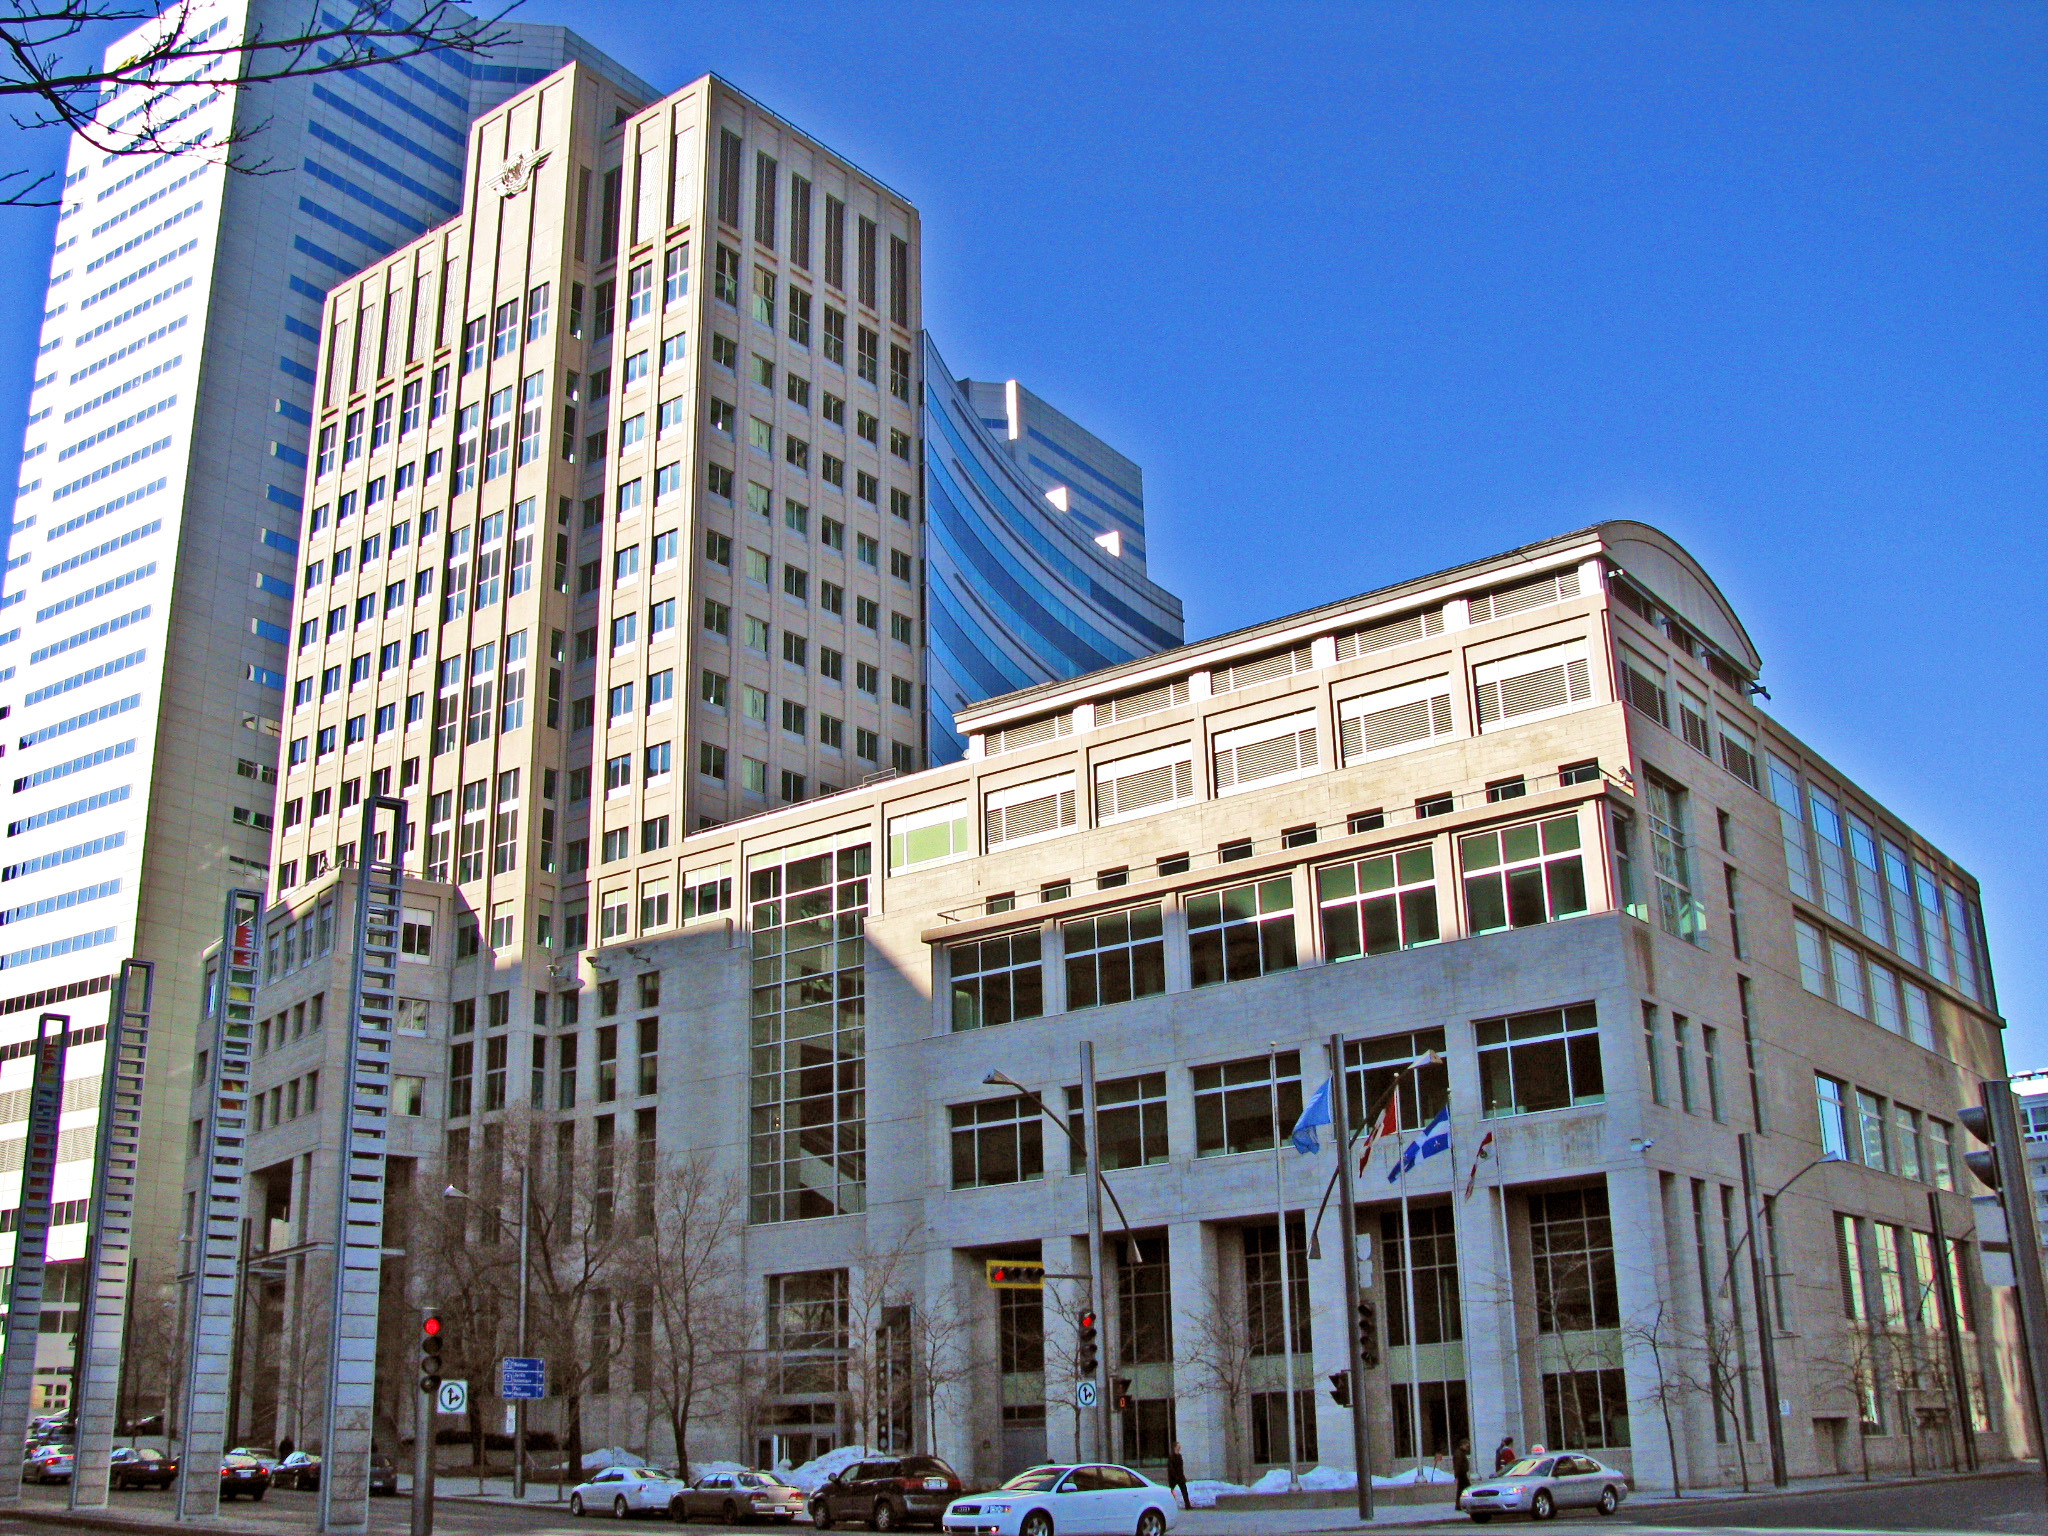 Iata HQ in Montréal, Canada. (Photo internet reproduction)